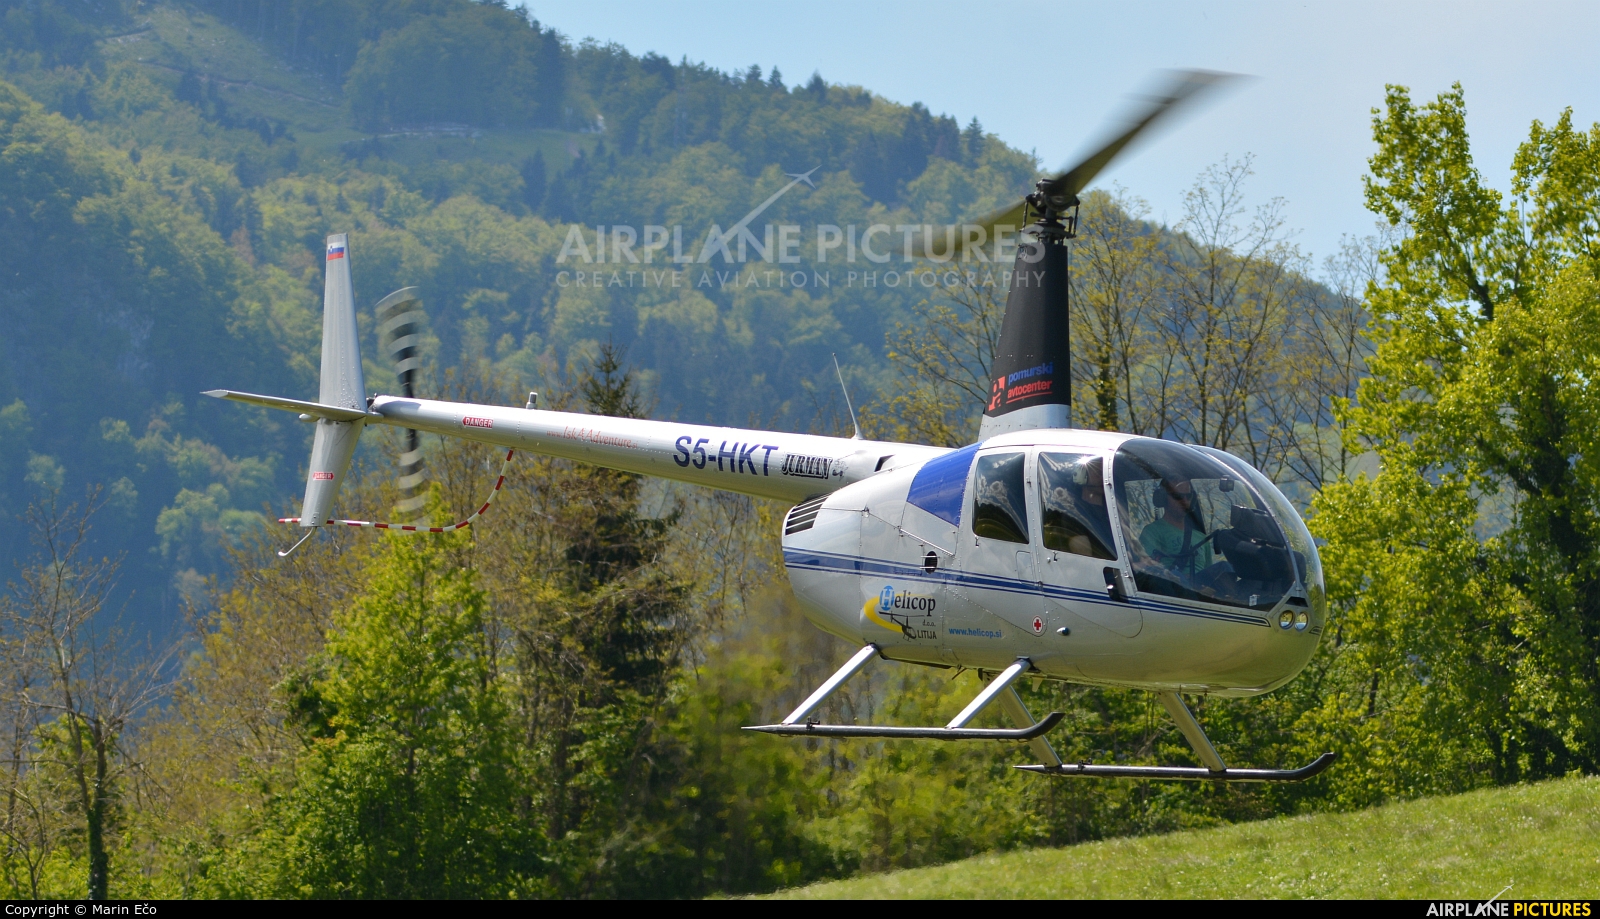 Helicop Litija S5-HKT aircraft at Off Airport - Slovenia